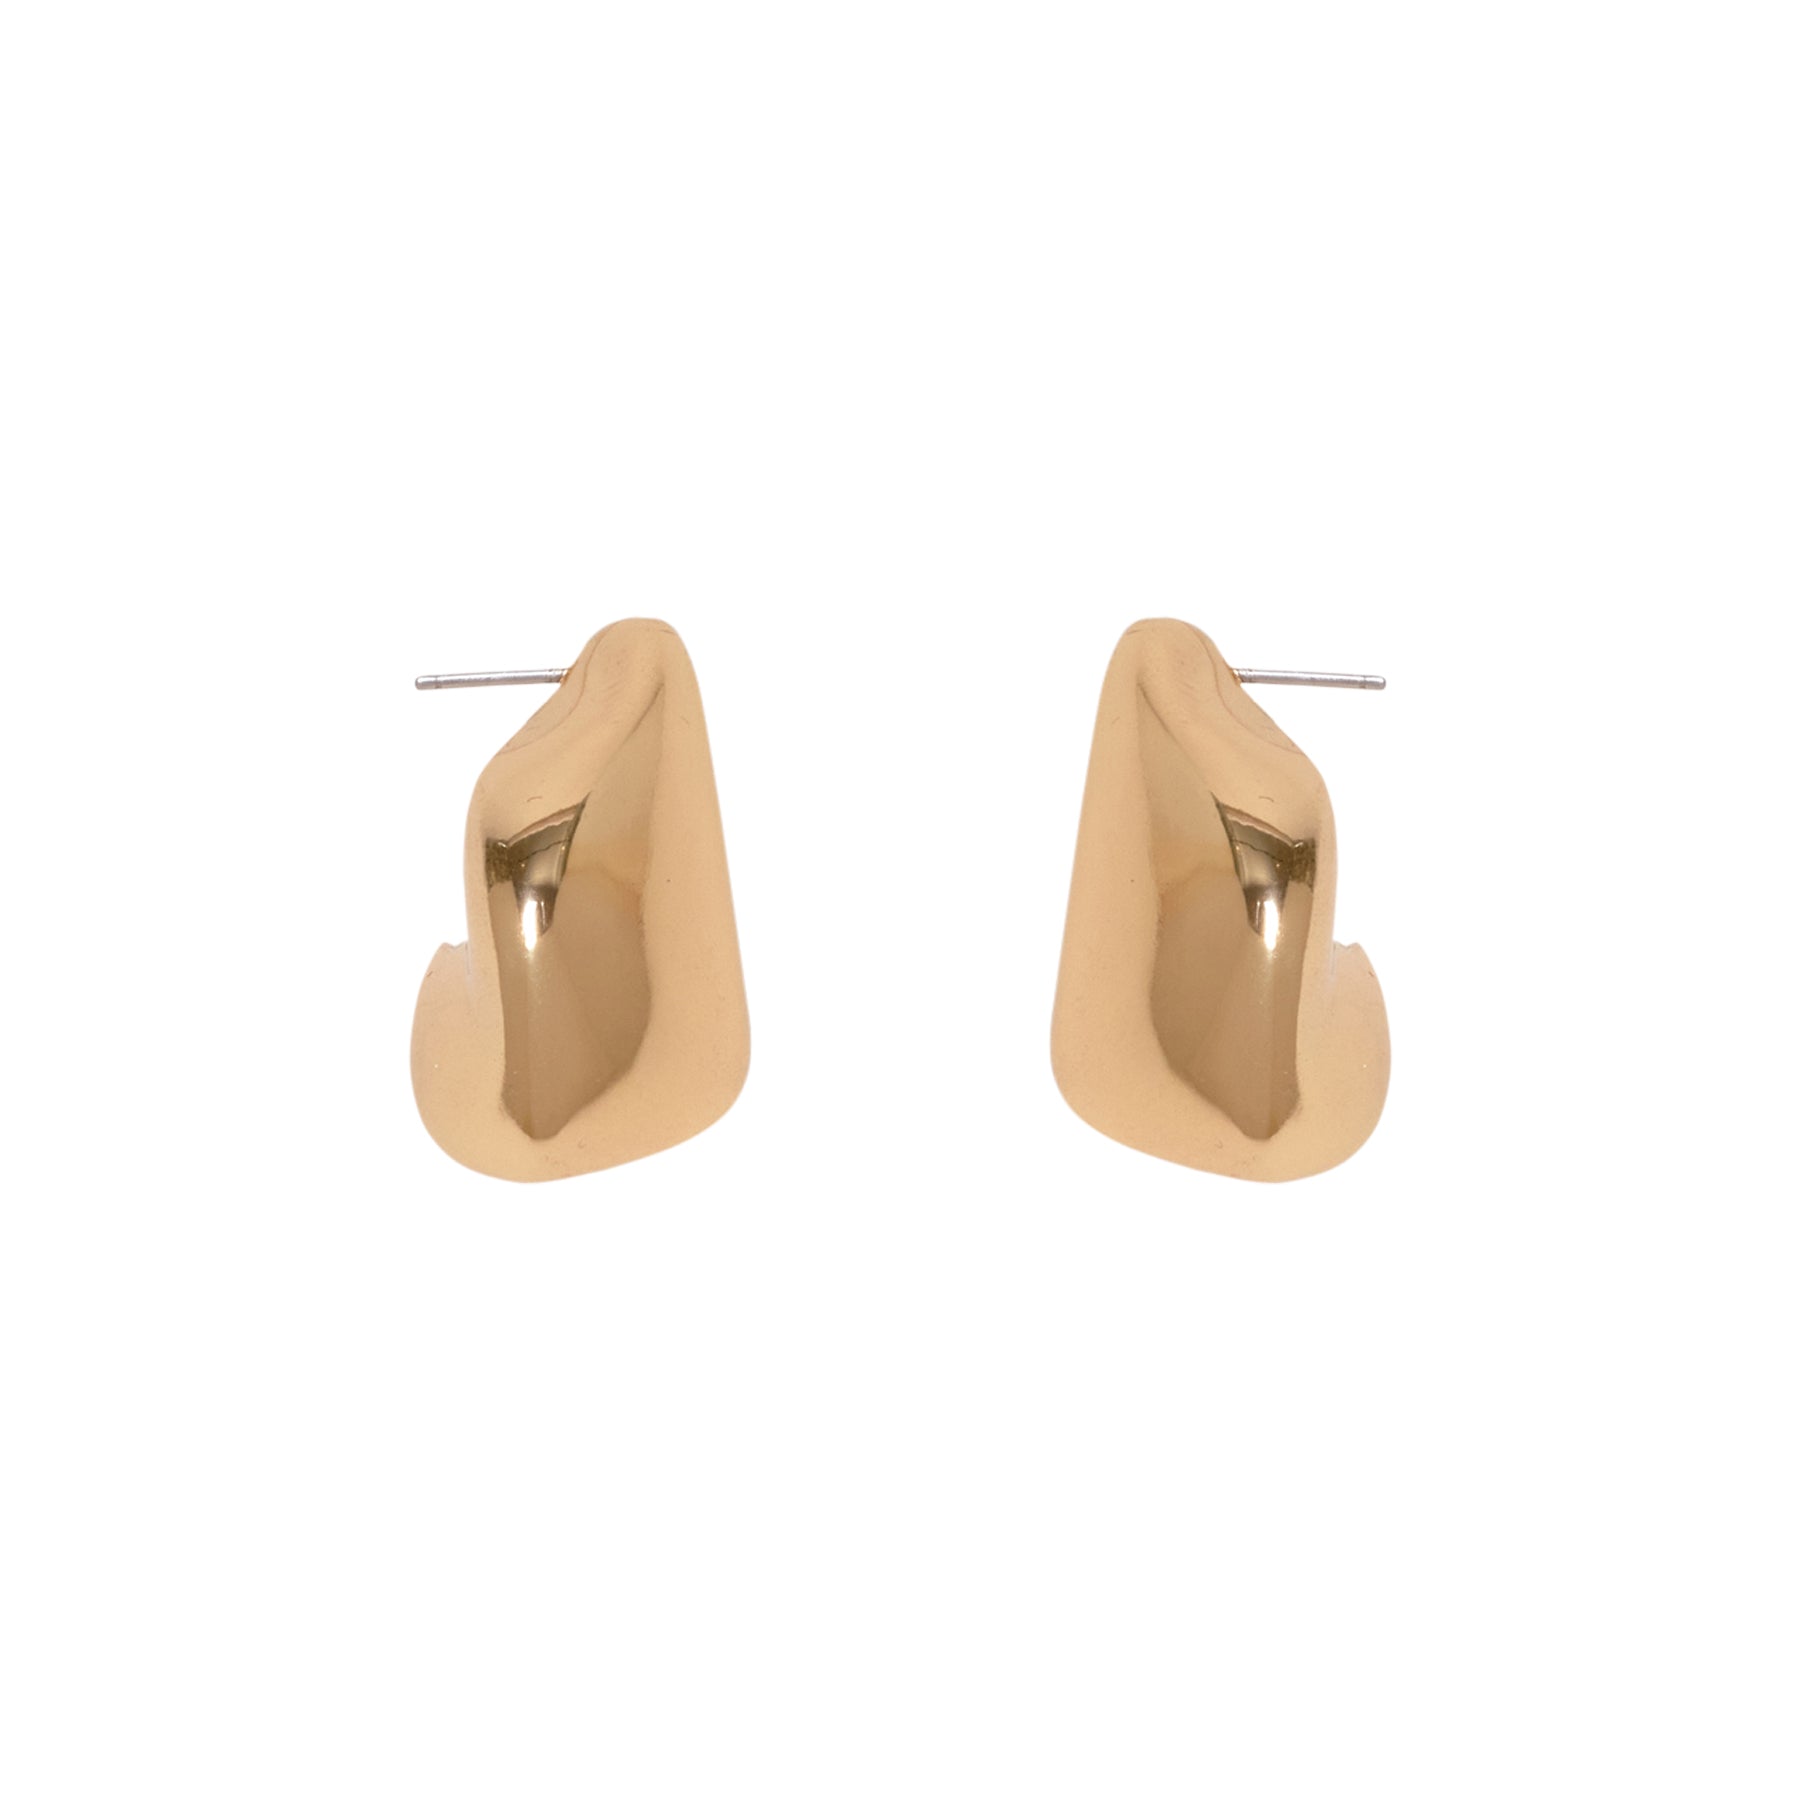 Leela Earrings by Mignonne Gavigan